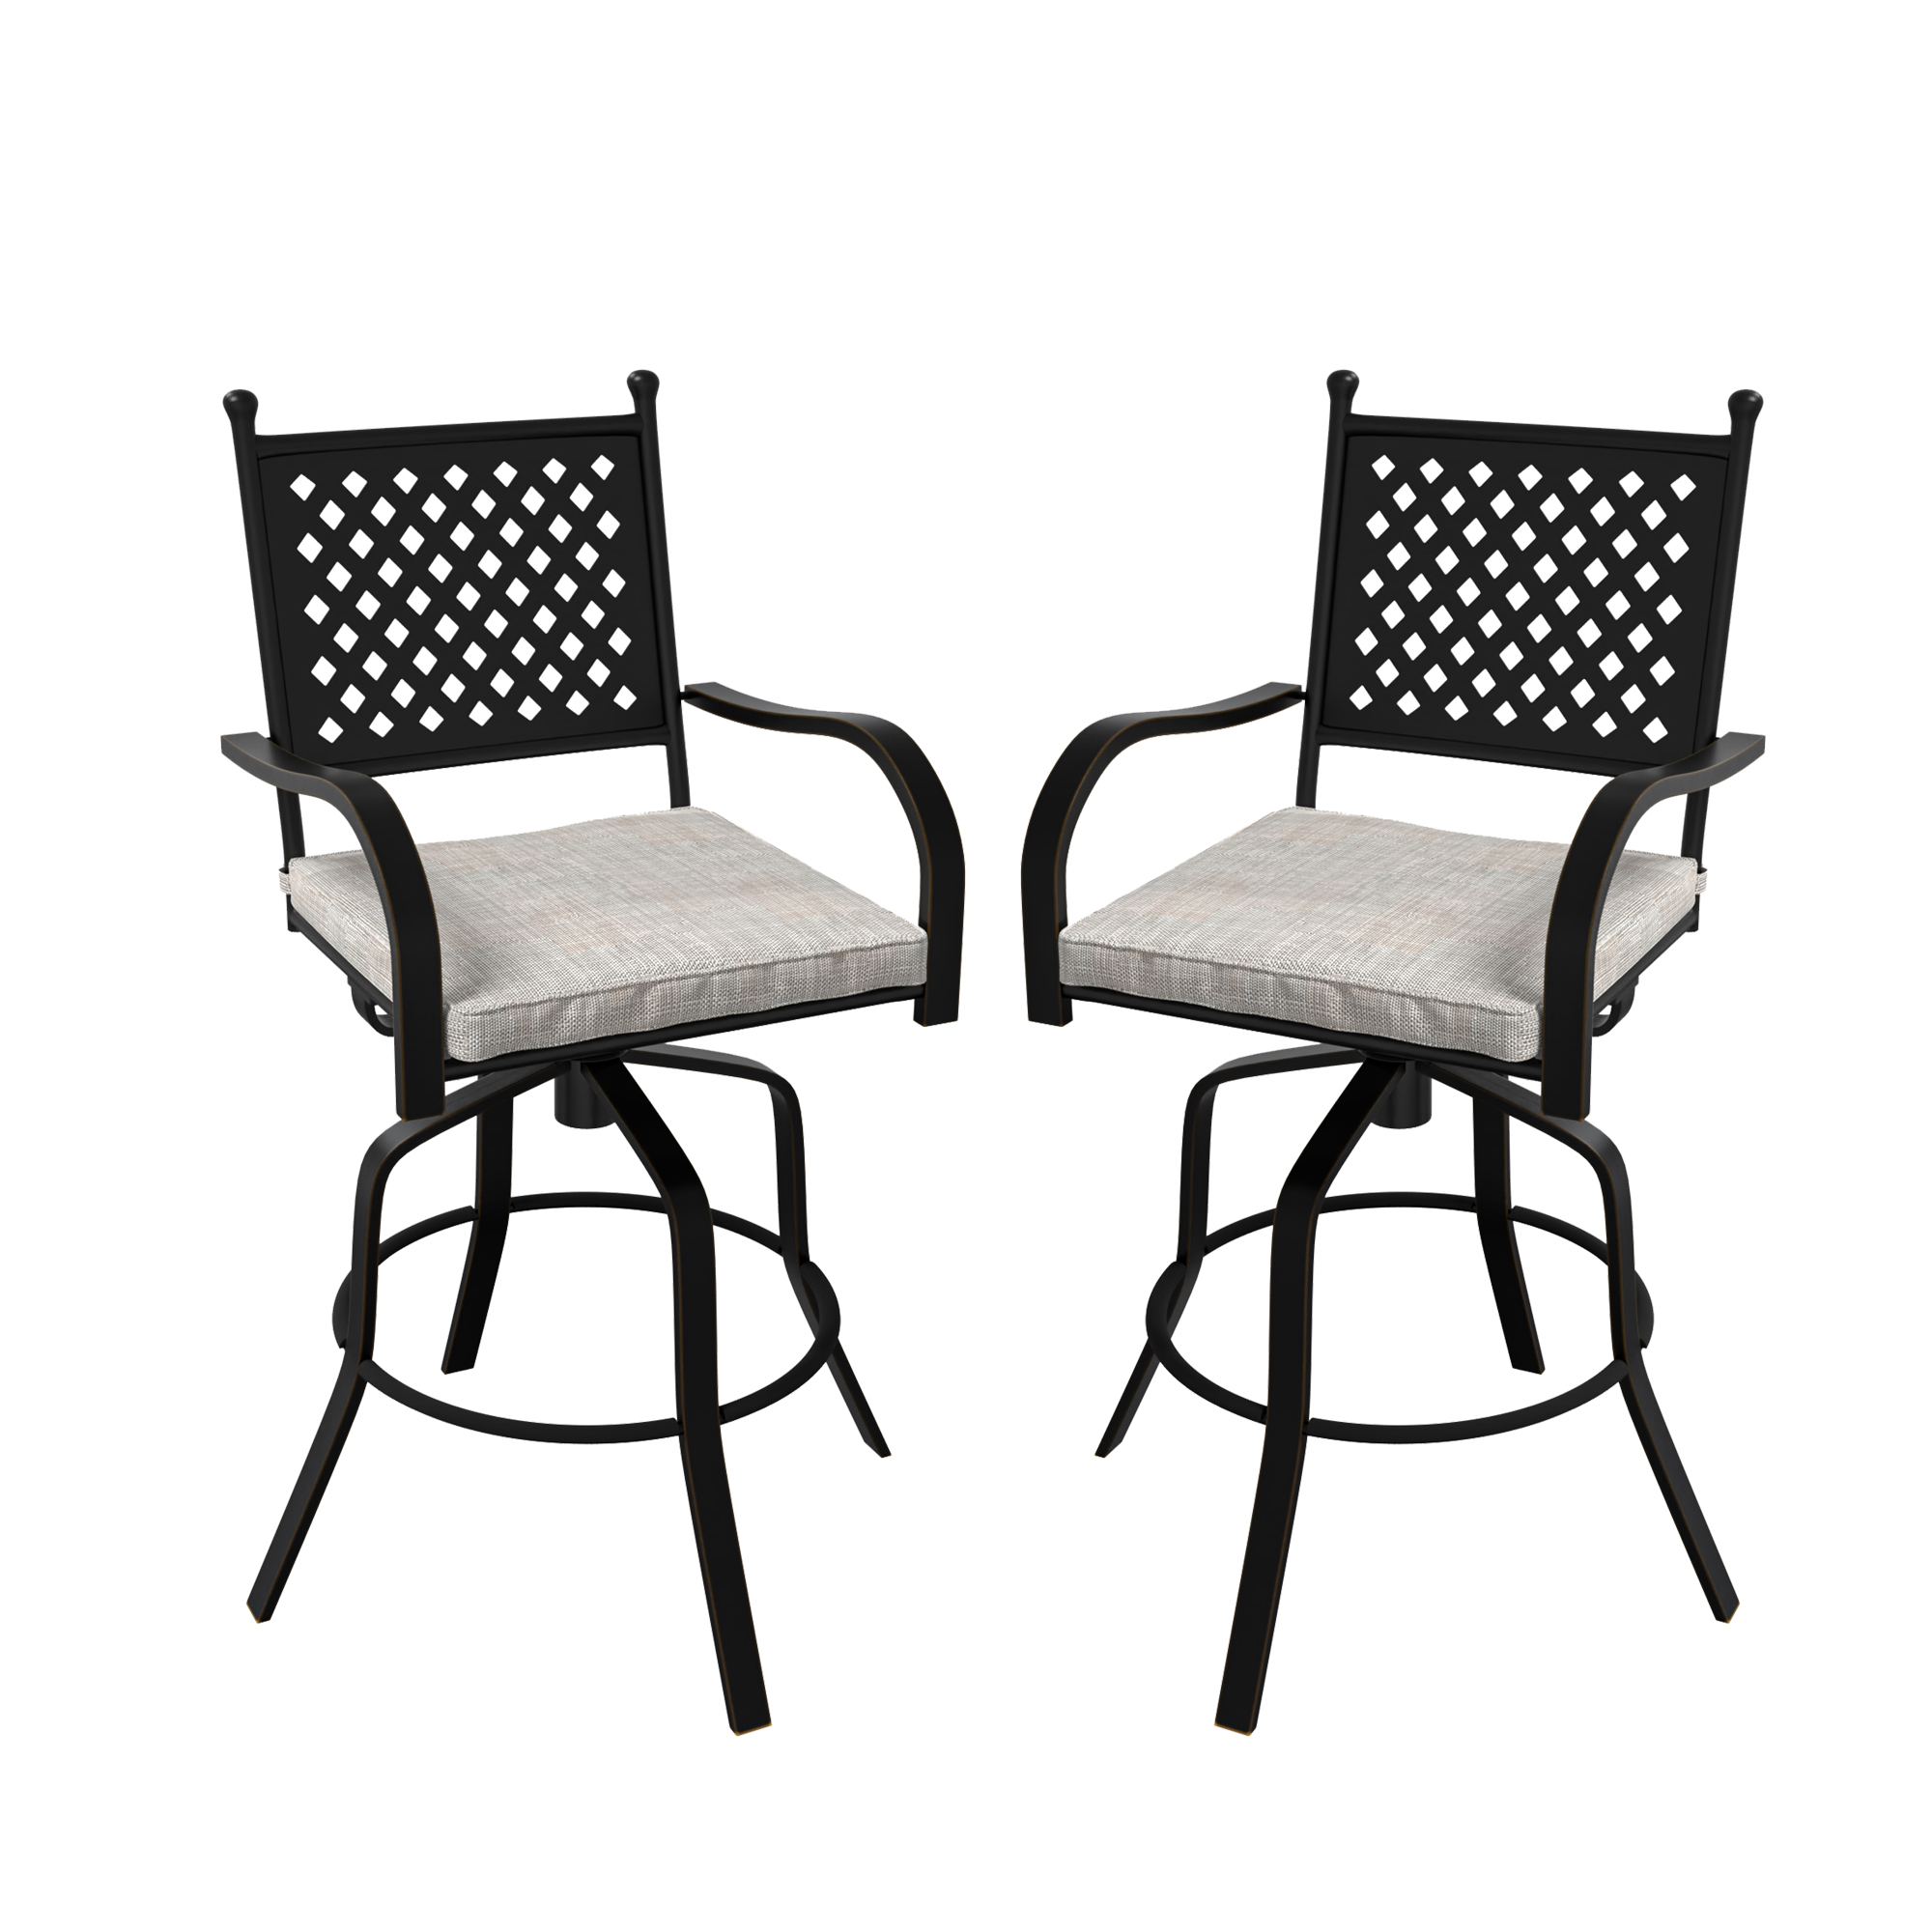 Mondawe Aluminium Frame Outdoor Swivel Chairs Dining Chairs Bar Stool with Cushion-Mondawe